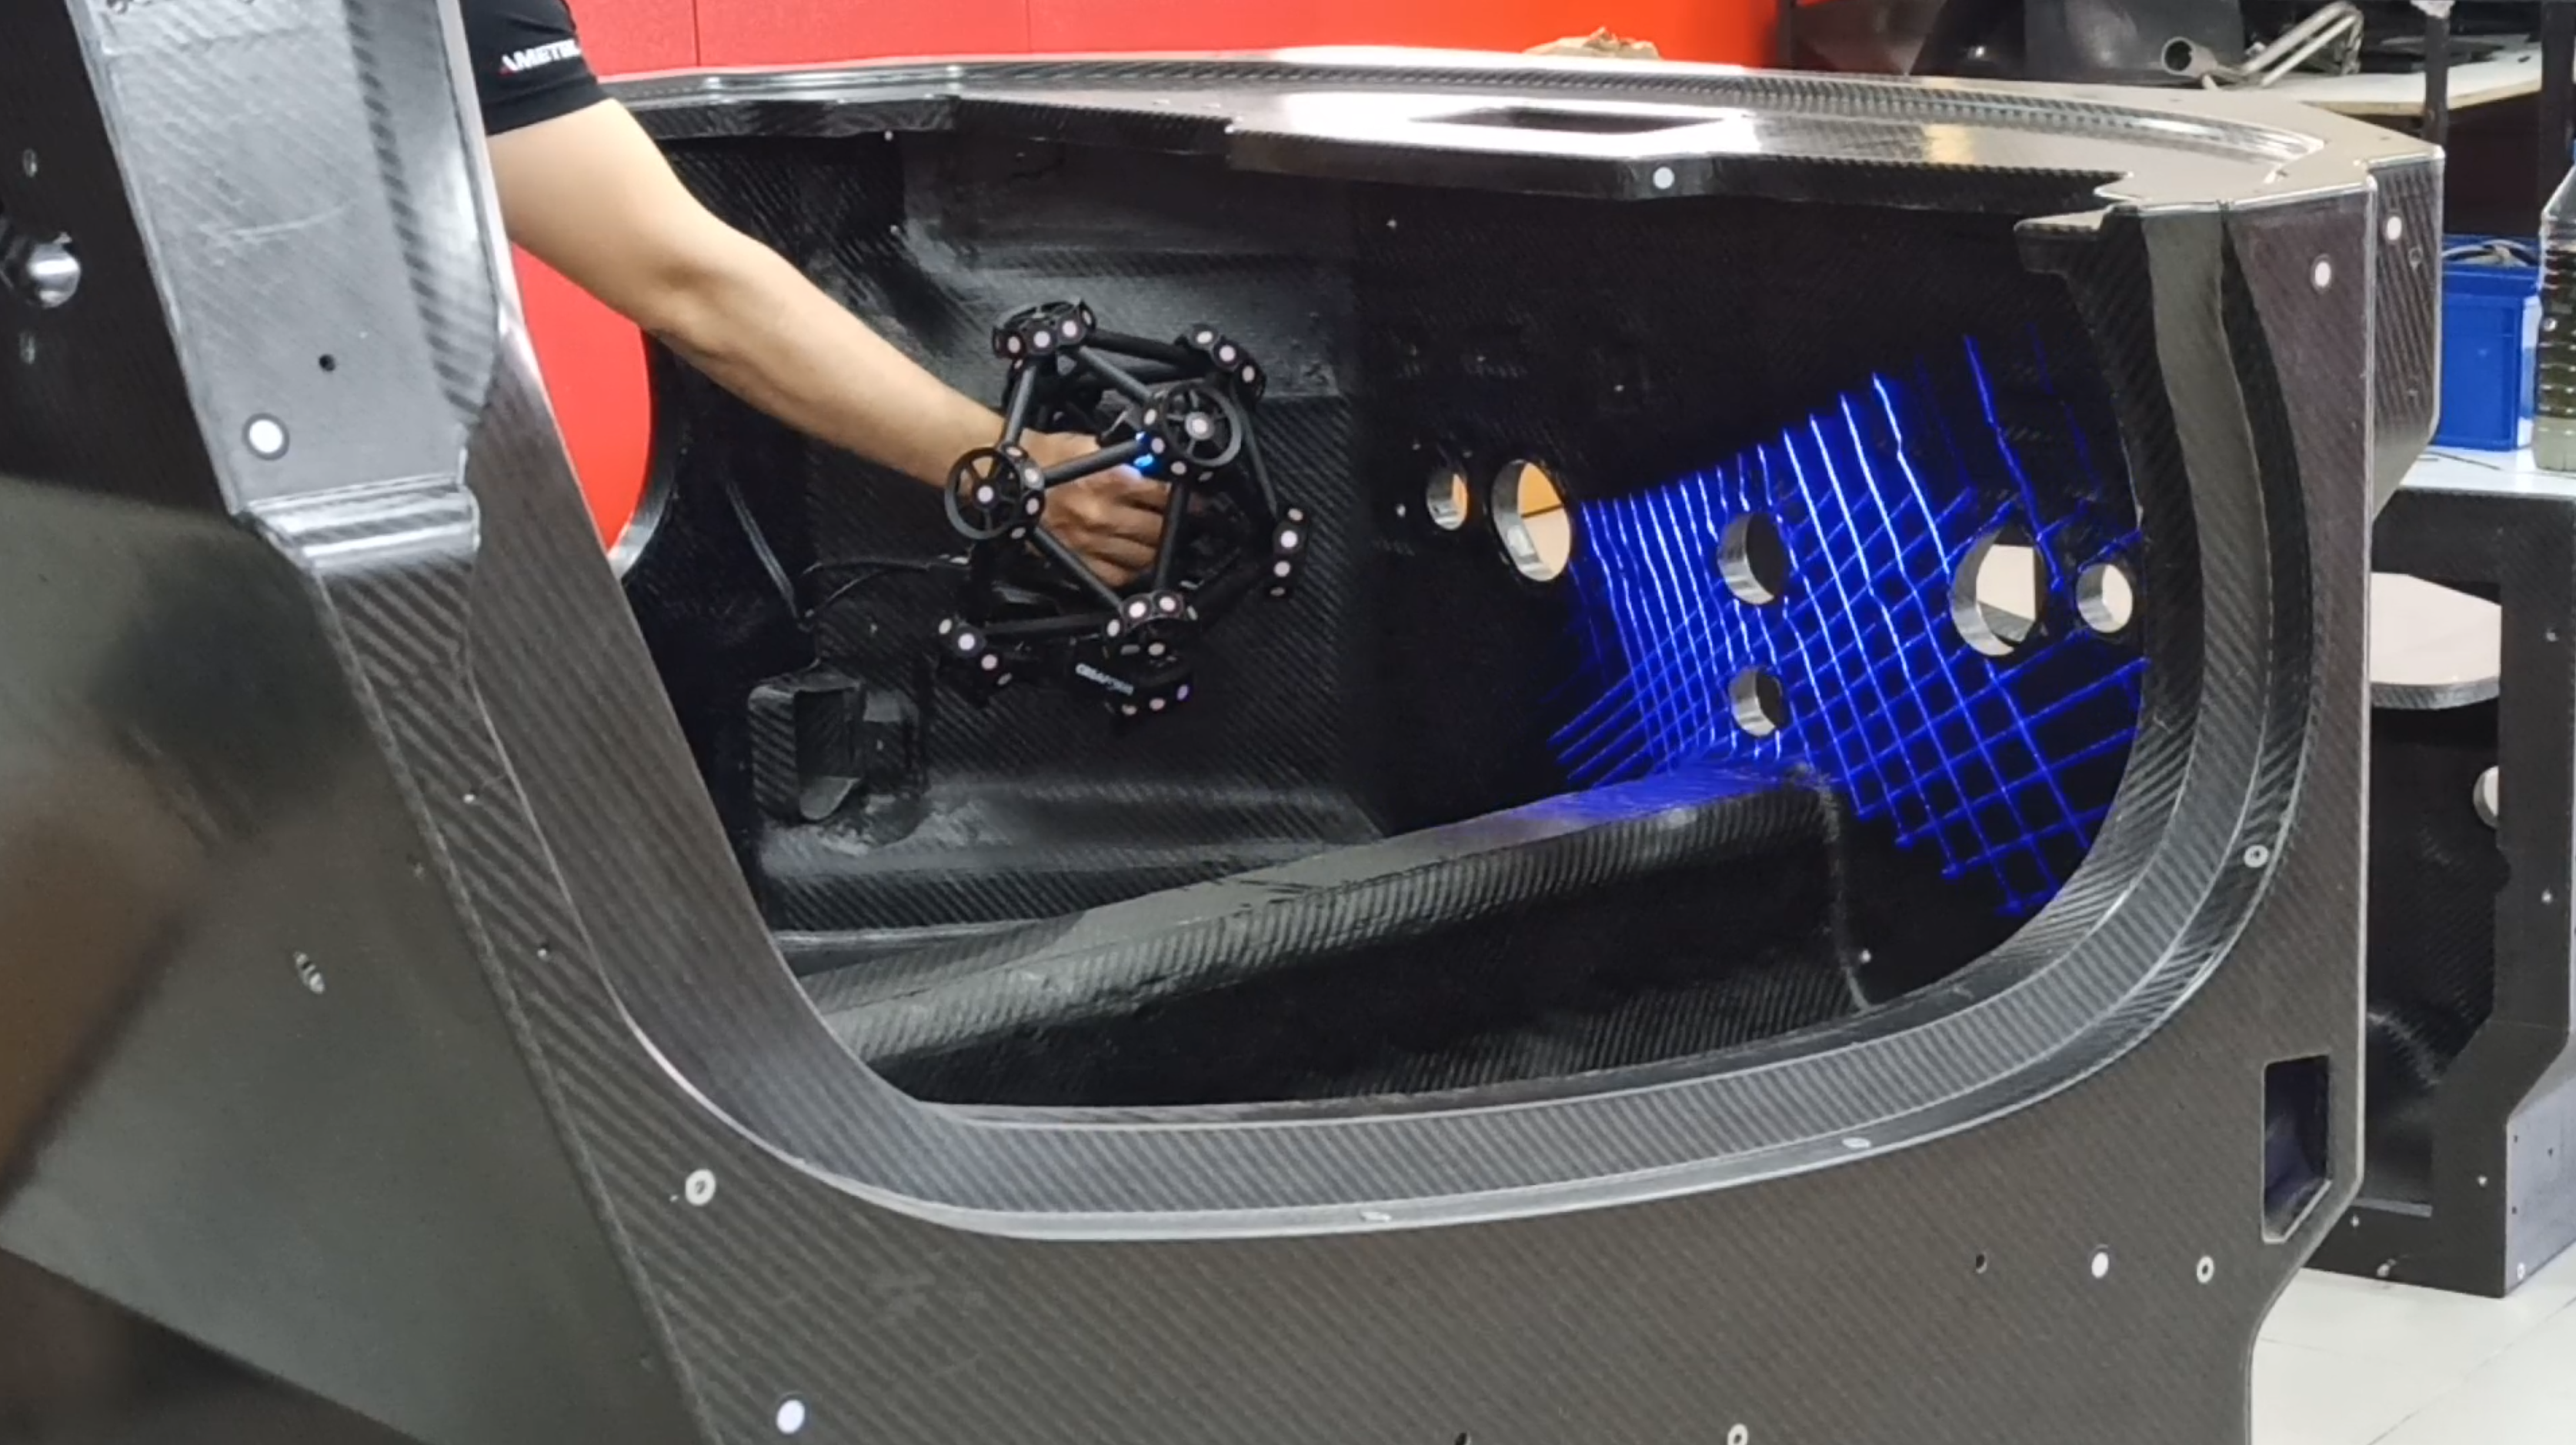 MetraSCAN 3D is scanning fiber carbon car’s piece.